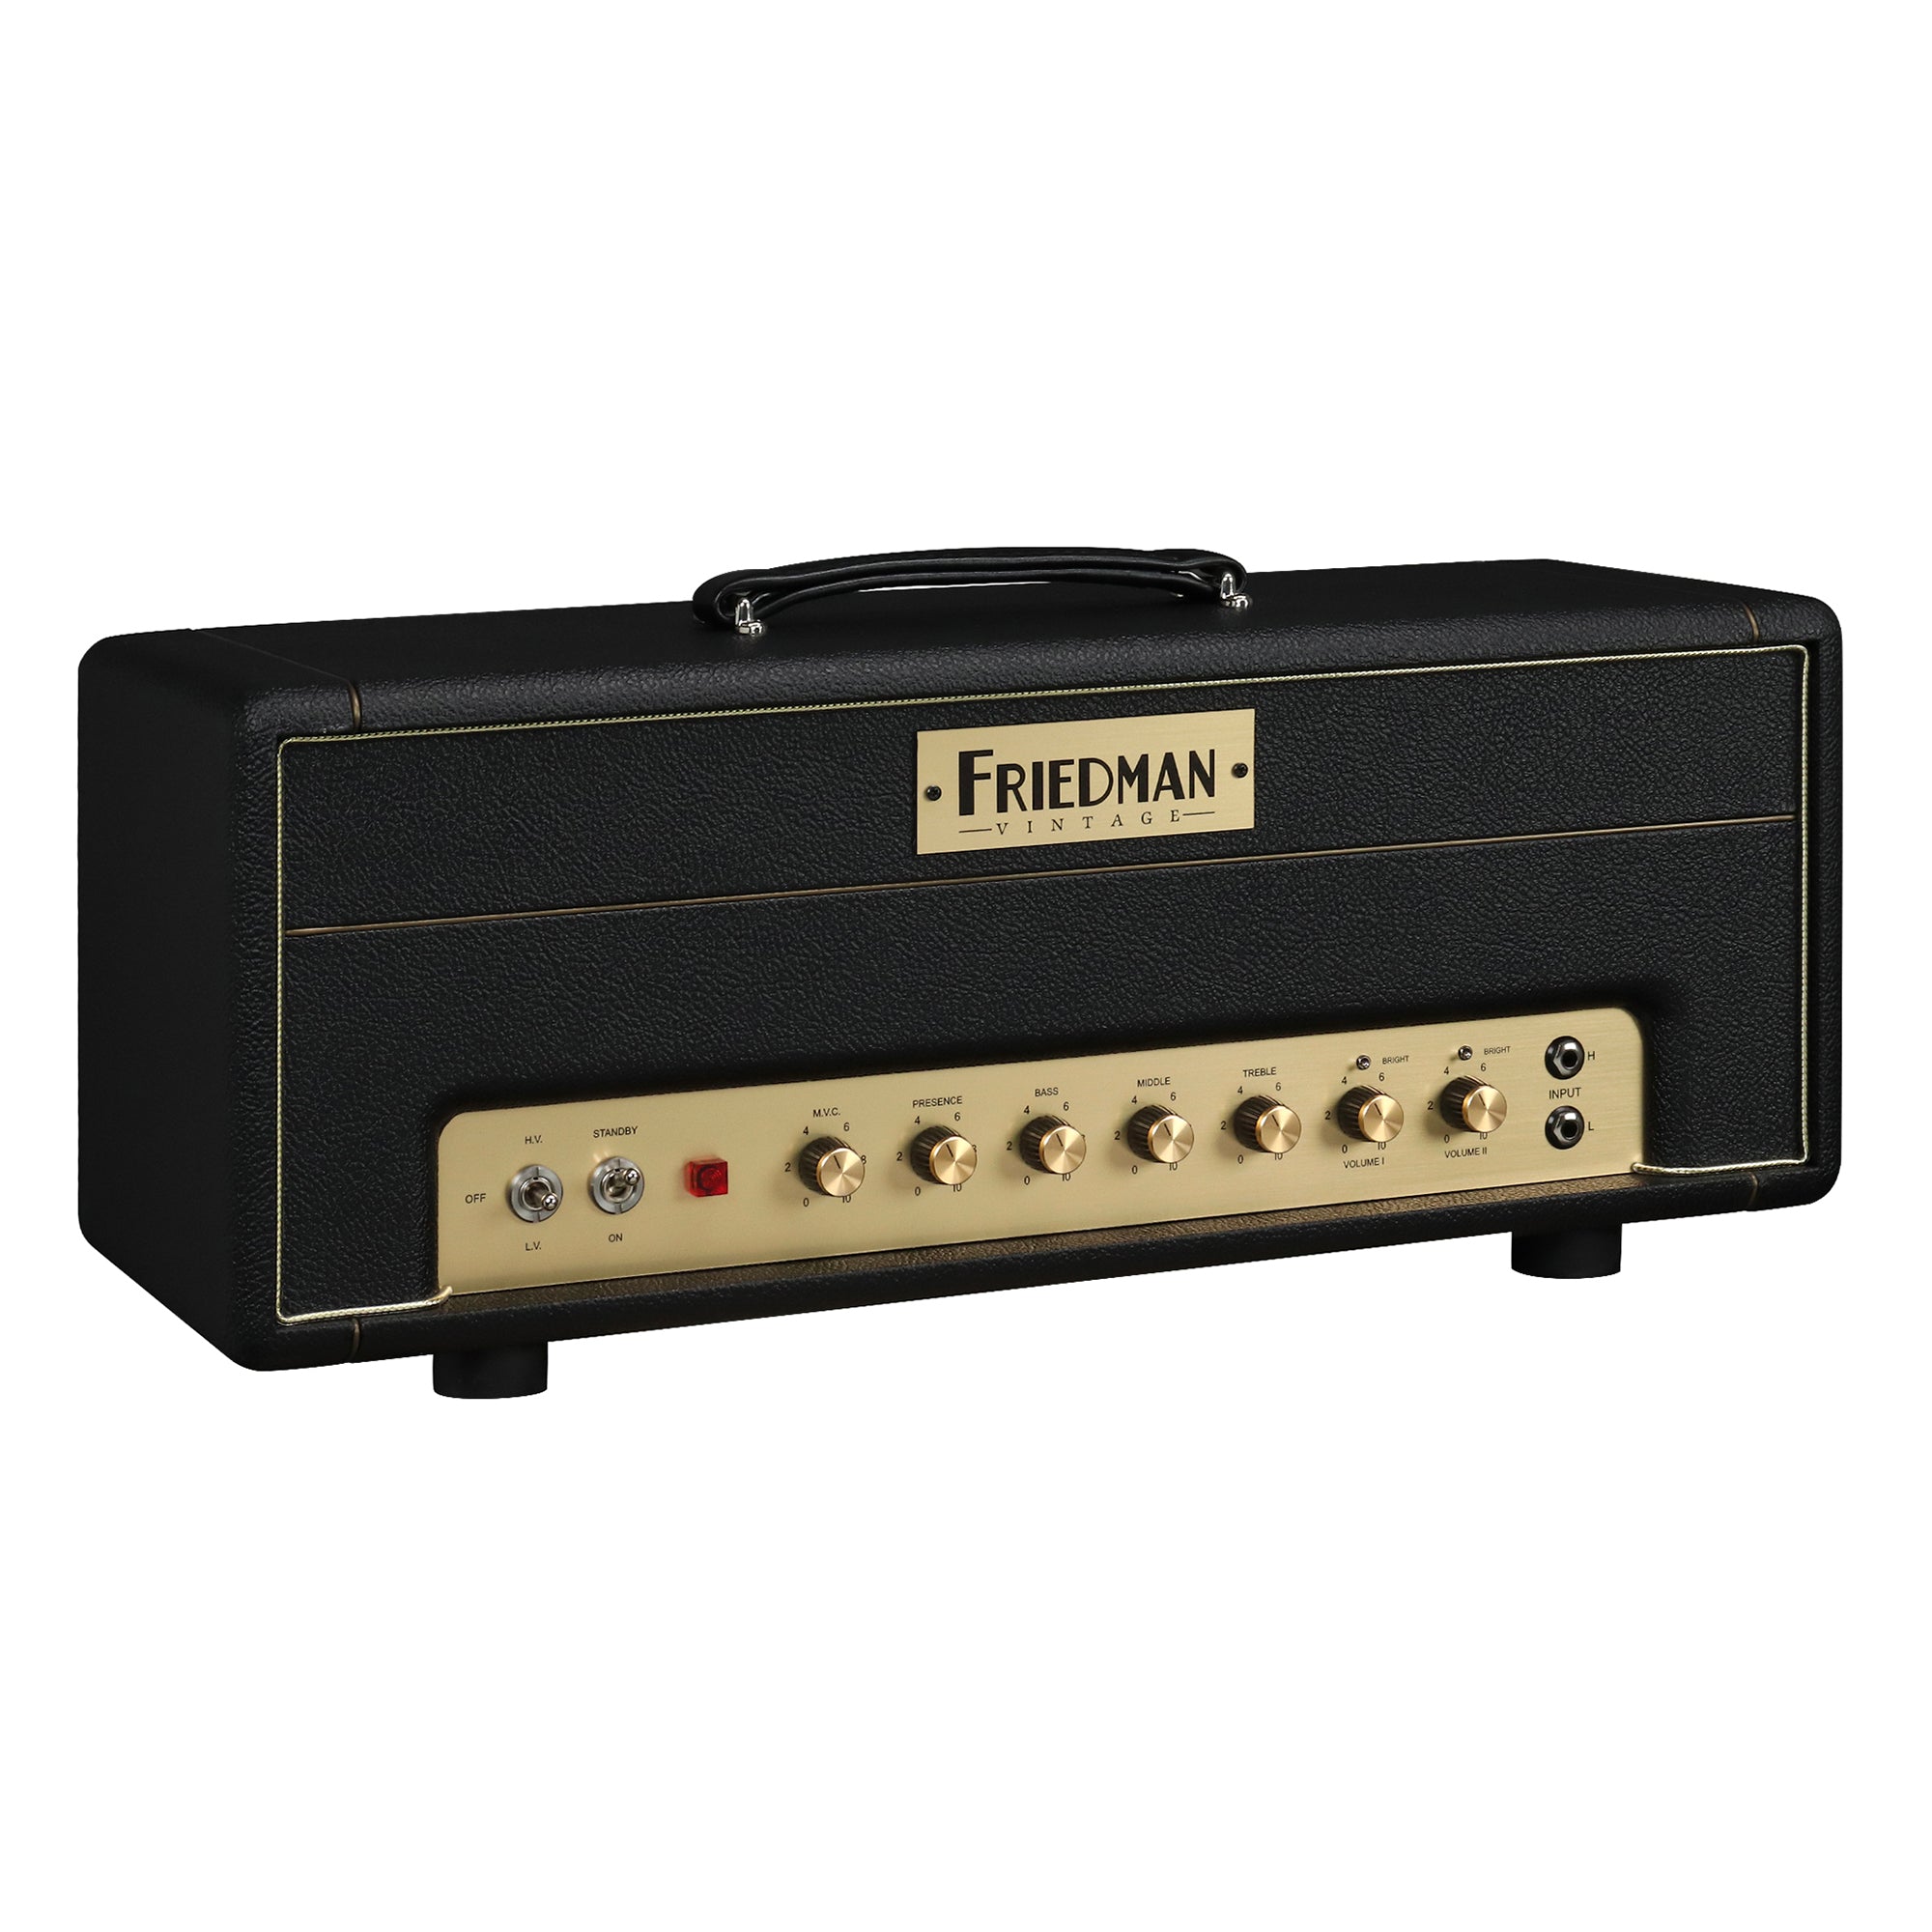 Friedman Plex Vintage Series 50w Guitar Amp Head